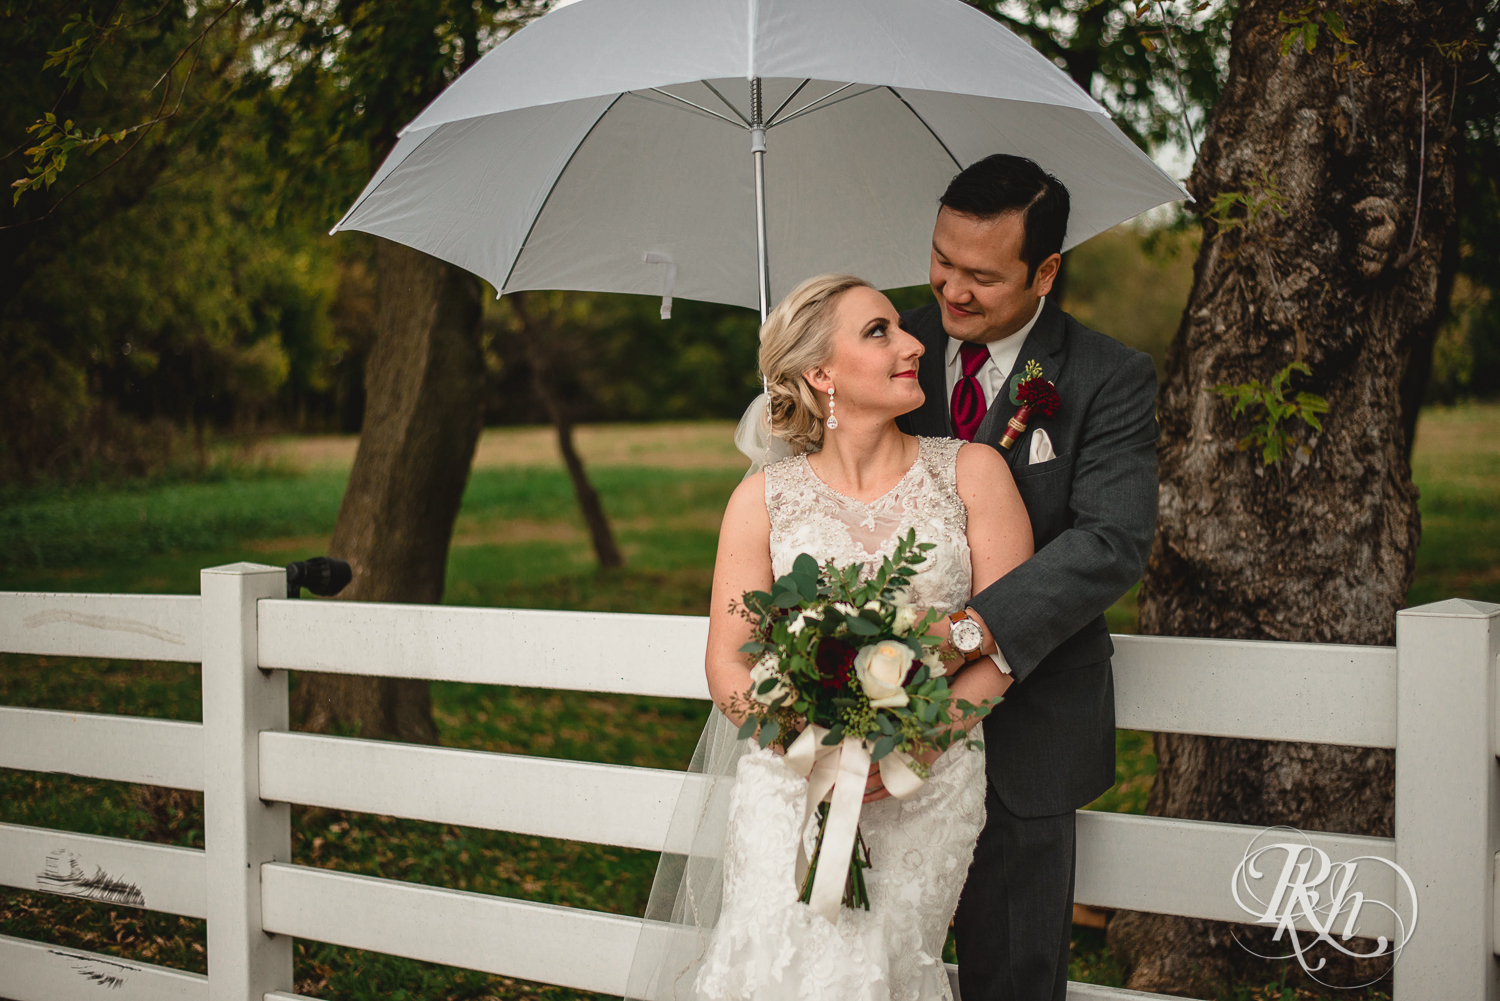 Bride and groom smile under umbrella on rainy day wedding at Green Acres Event Center in Eden Prairie, Minnesota.